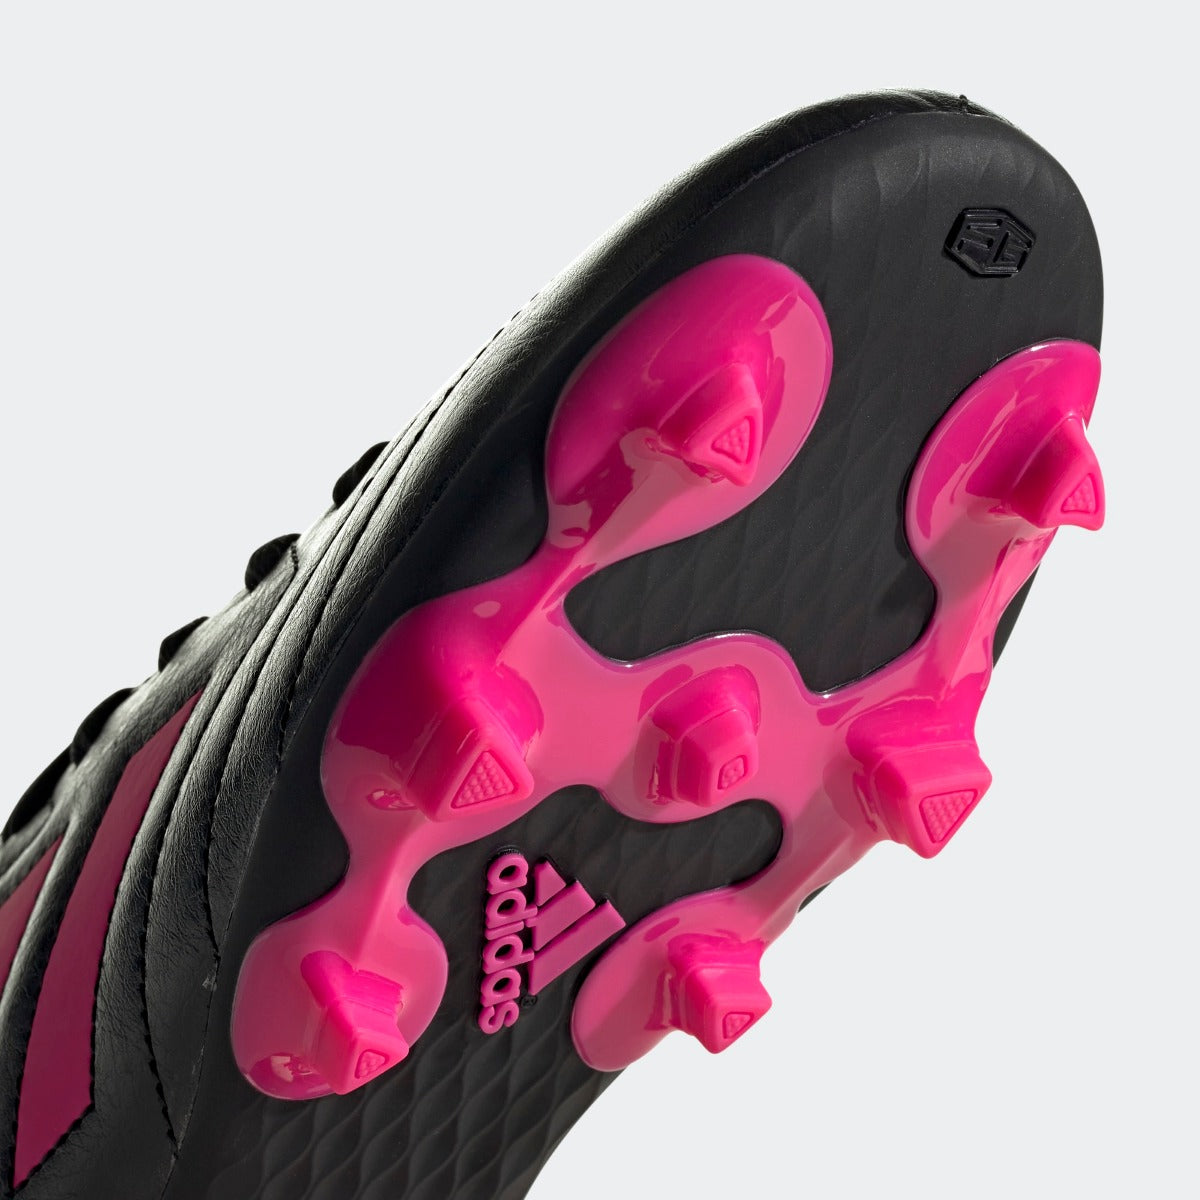 Adidas JR Goletto VII FG - Black-Pink